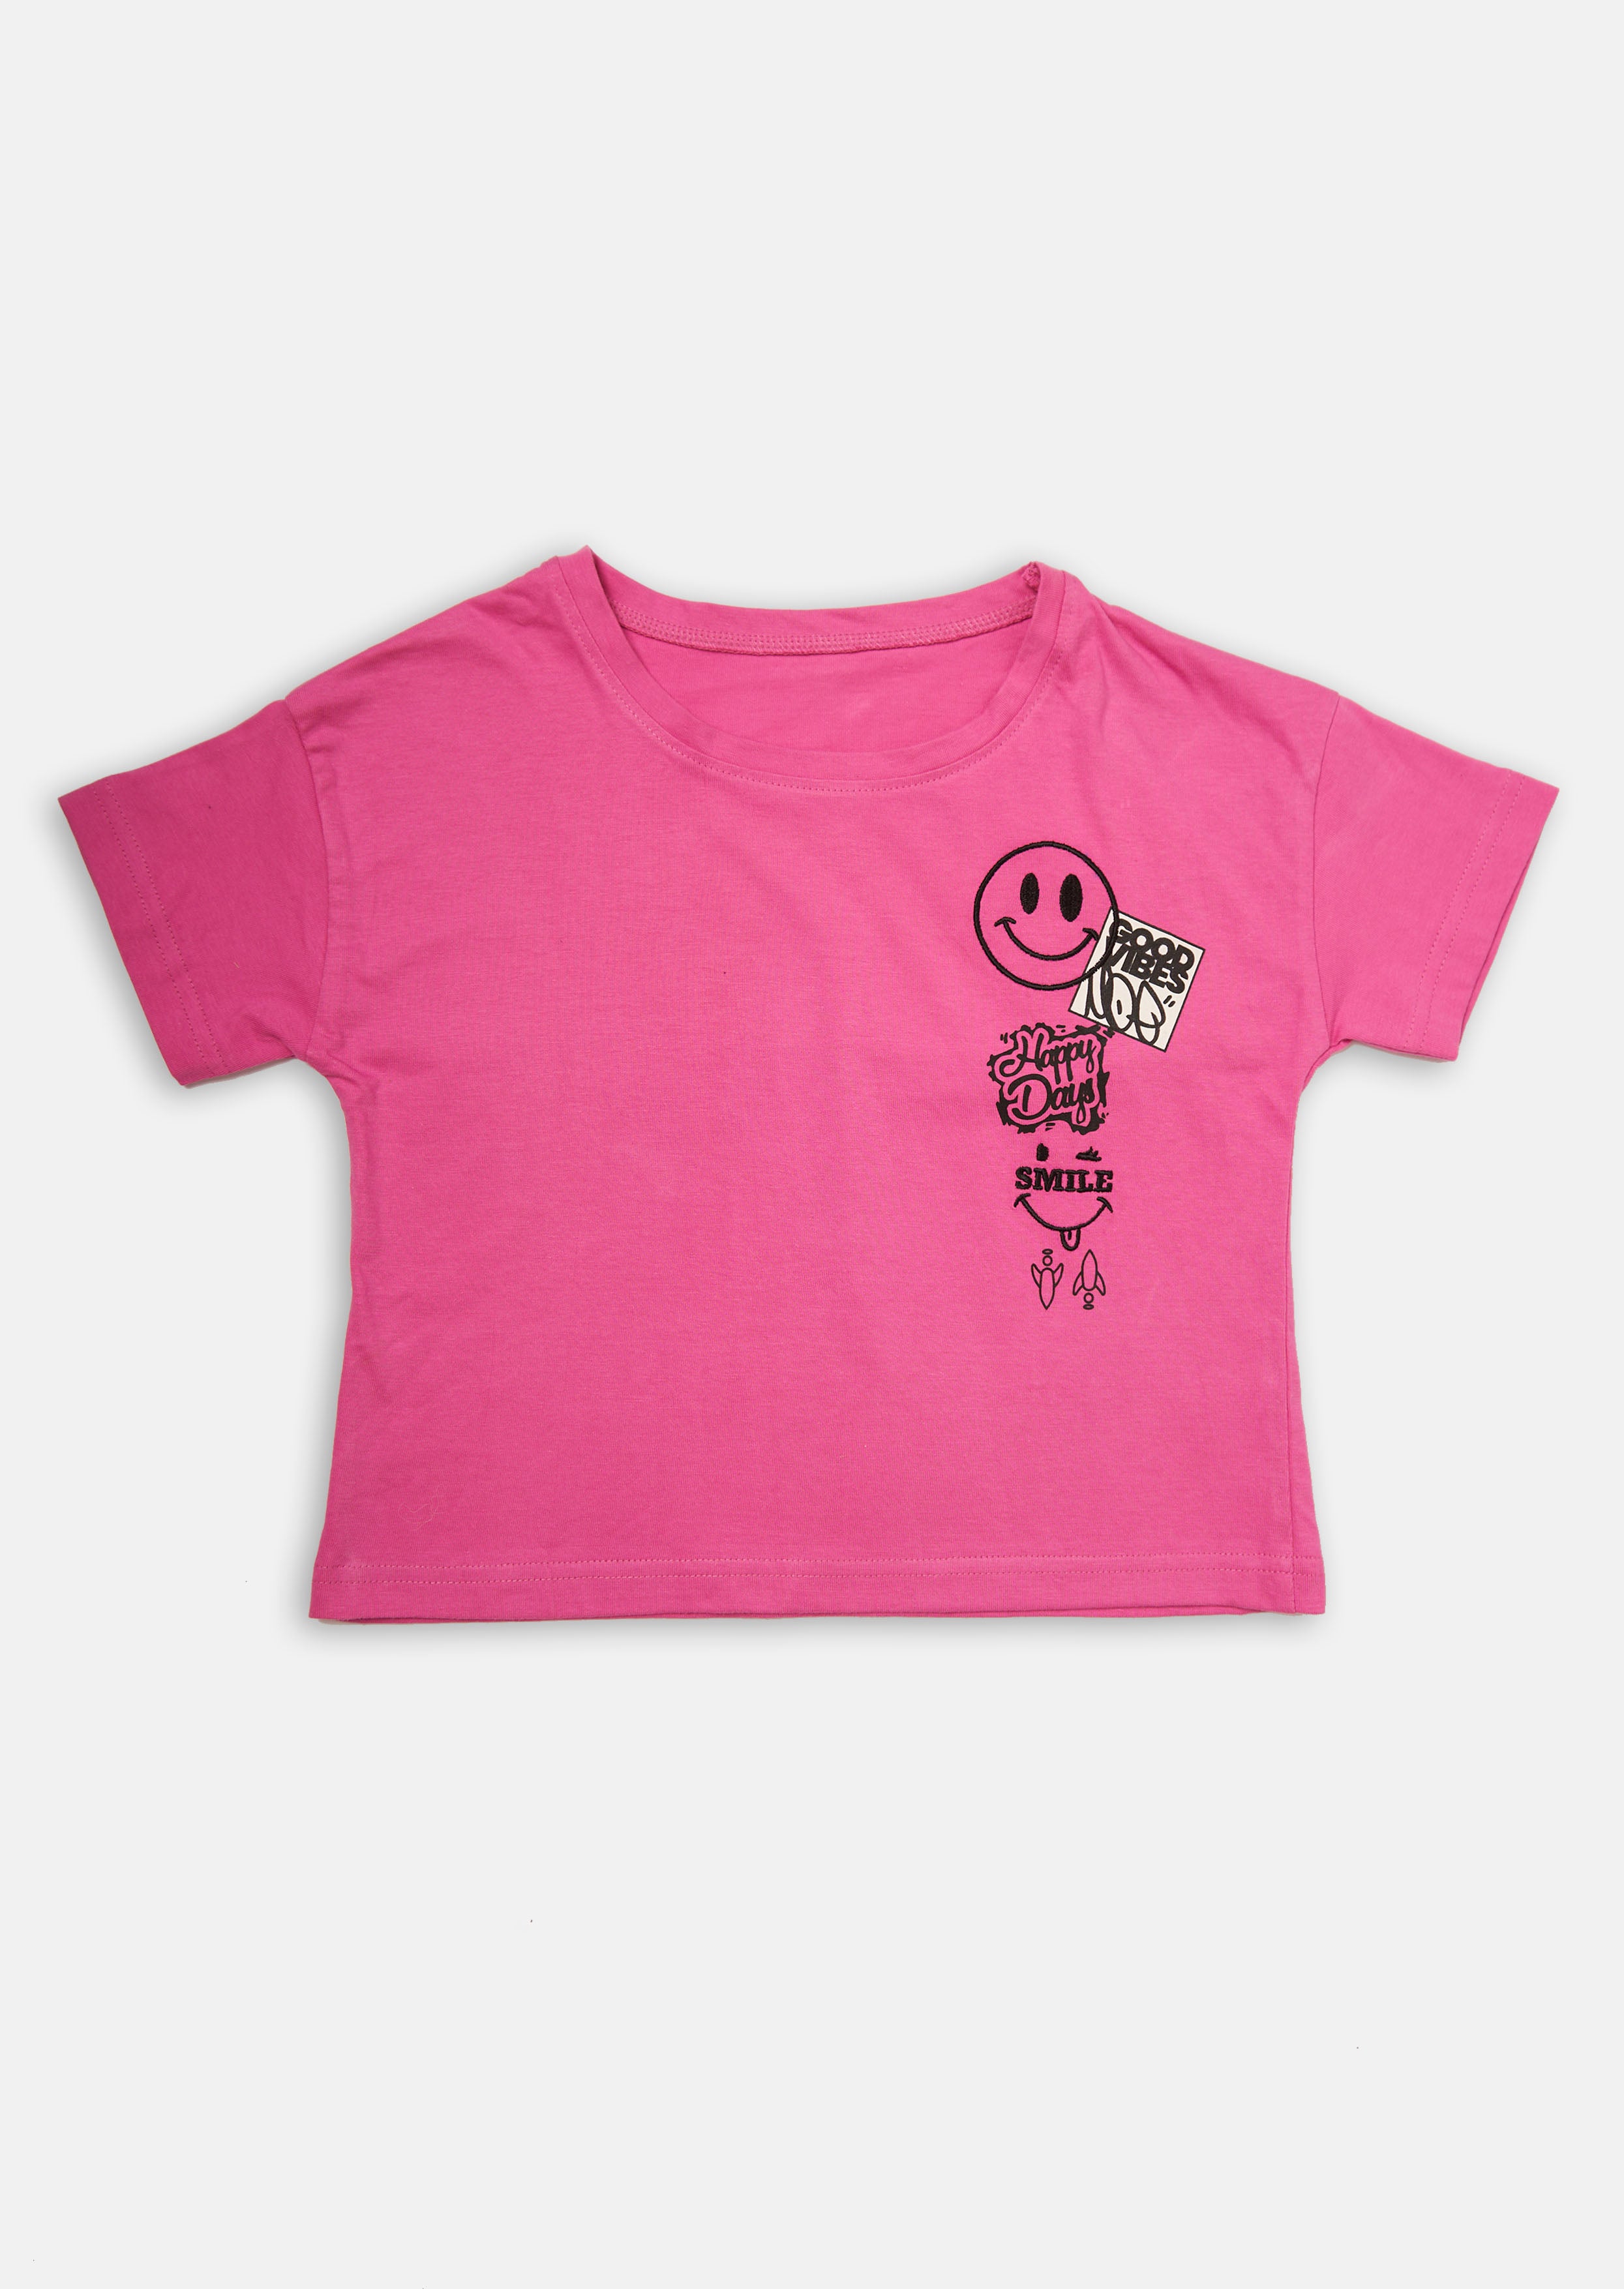 Girls Smiley Printed Pink T-Shirt